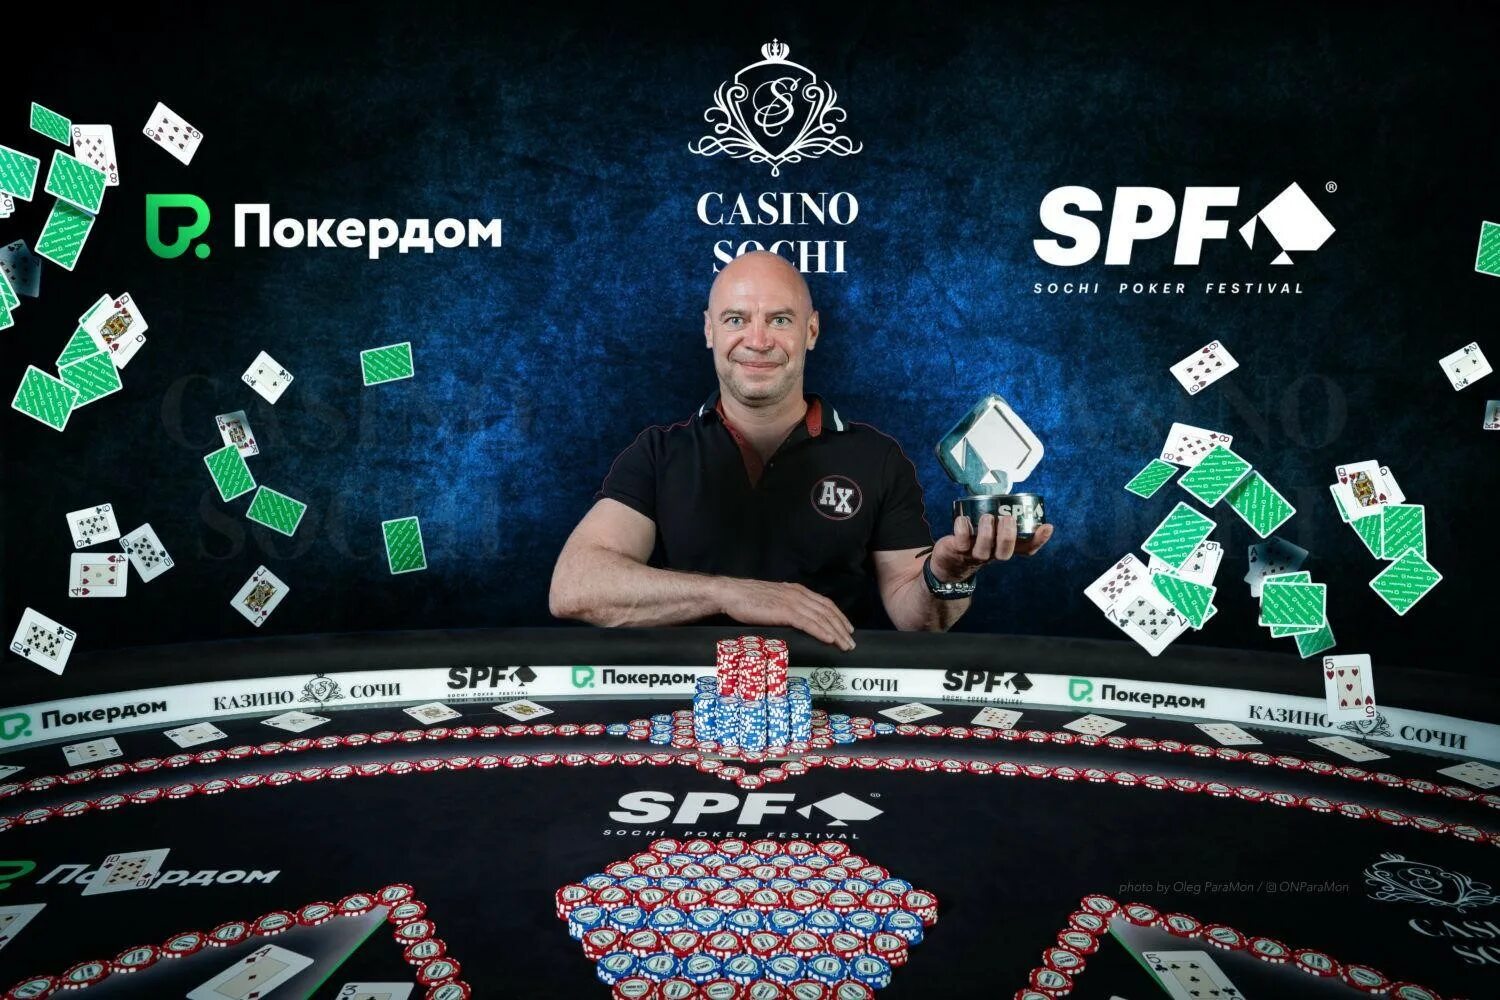 Pokerdom мобильная версия pokerdom world. Казино Сочи Покер. Казино Сочи Покер турнир. Покер дом. Казино Сочи турниры по покеру 2021.